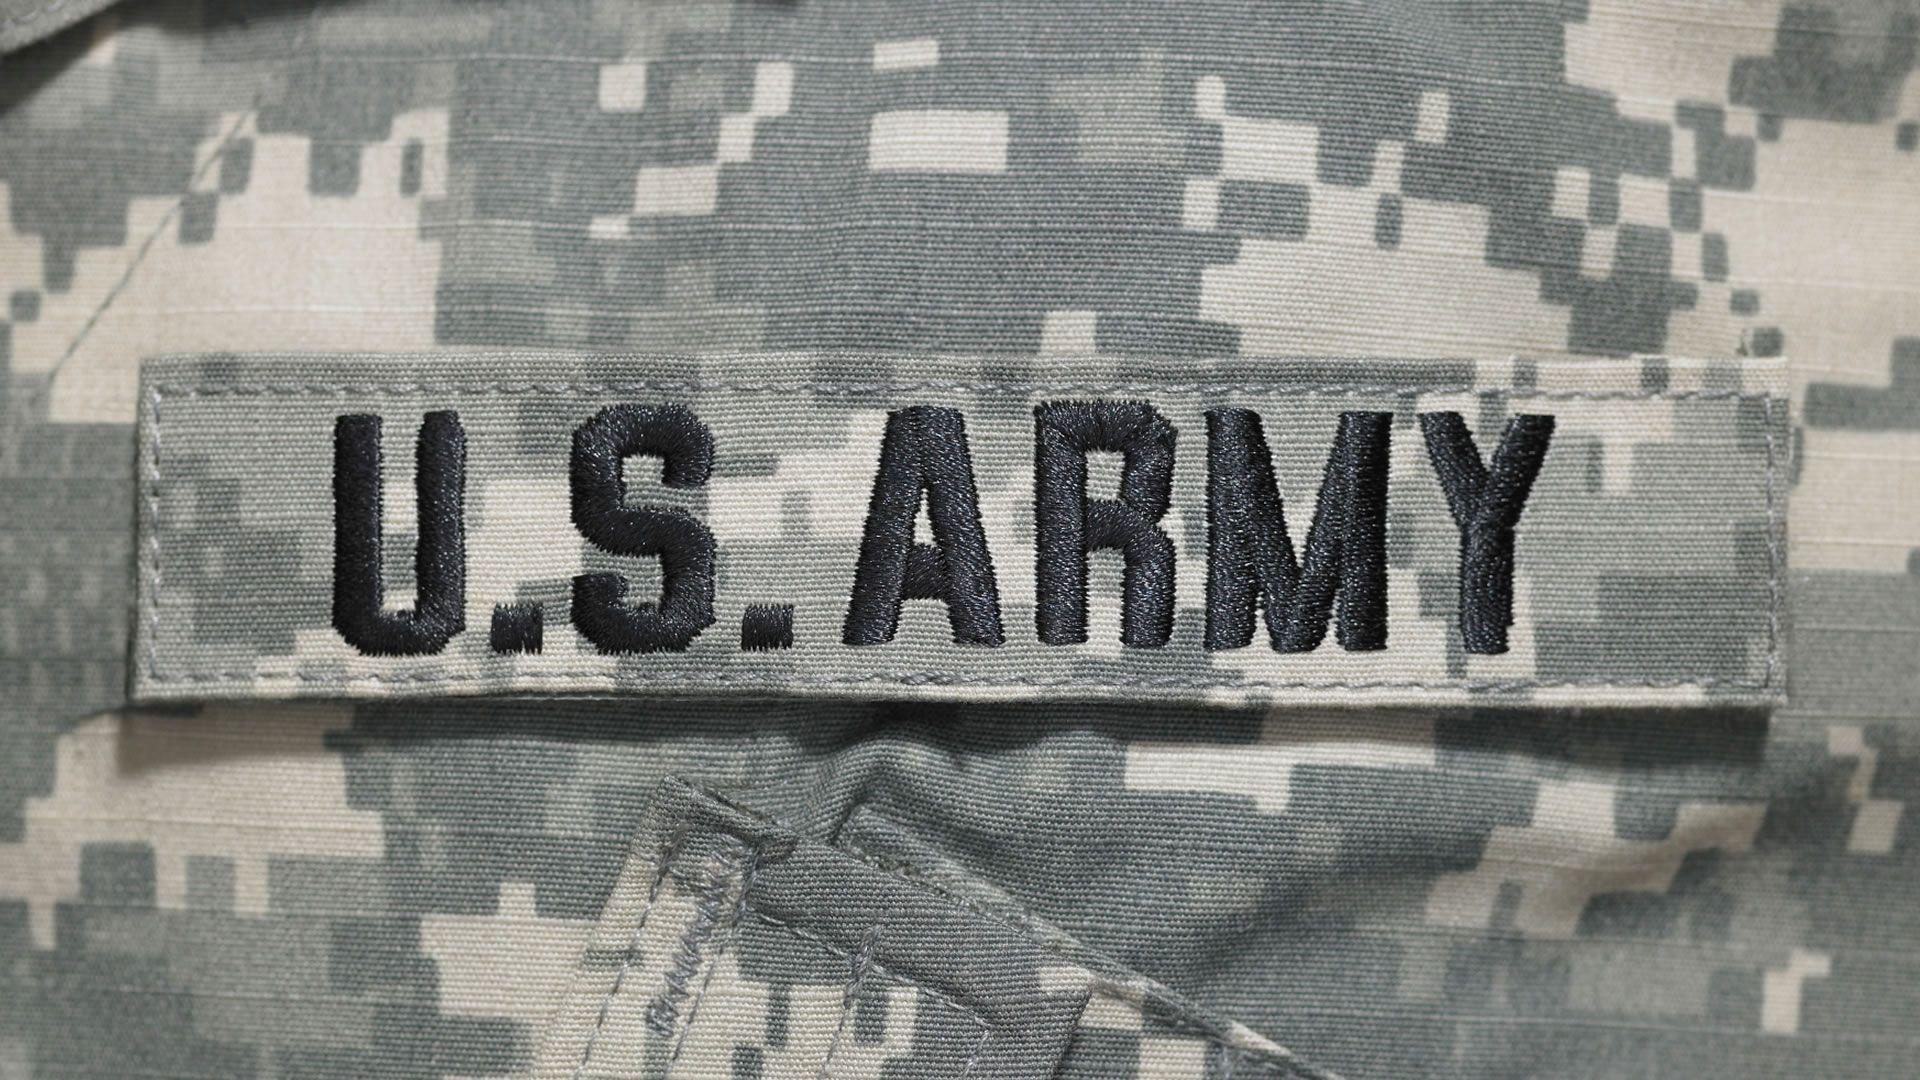 US Army Uniform Patch (2281)